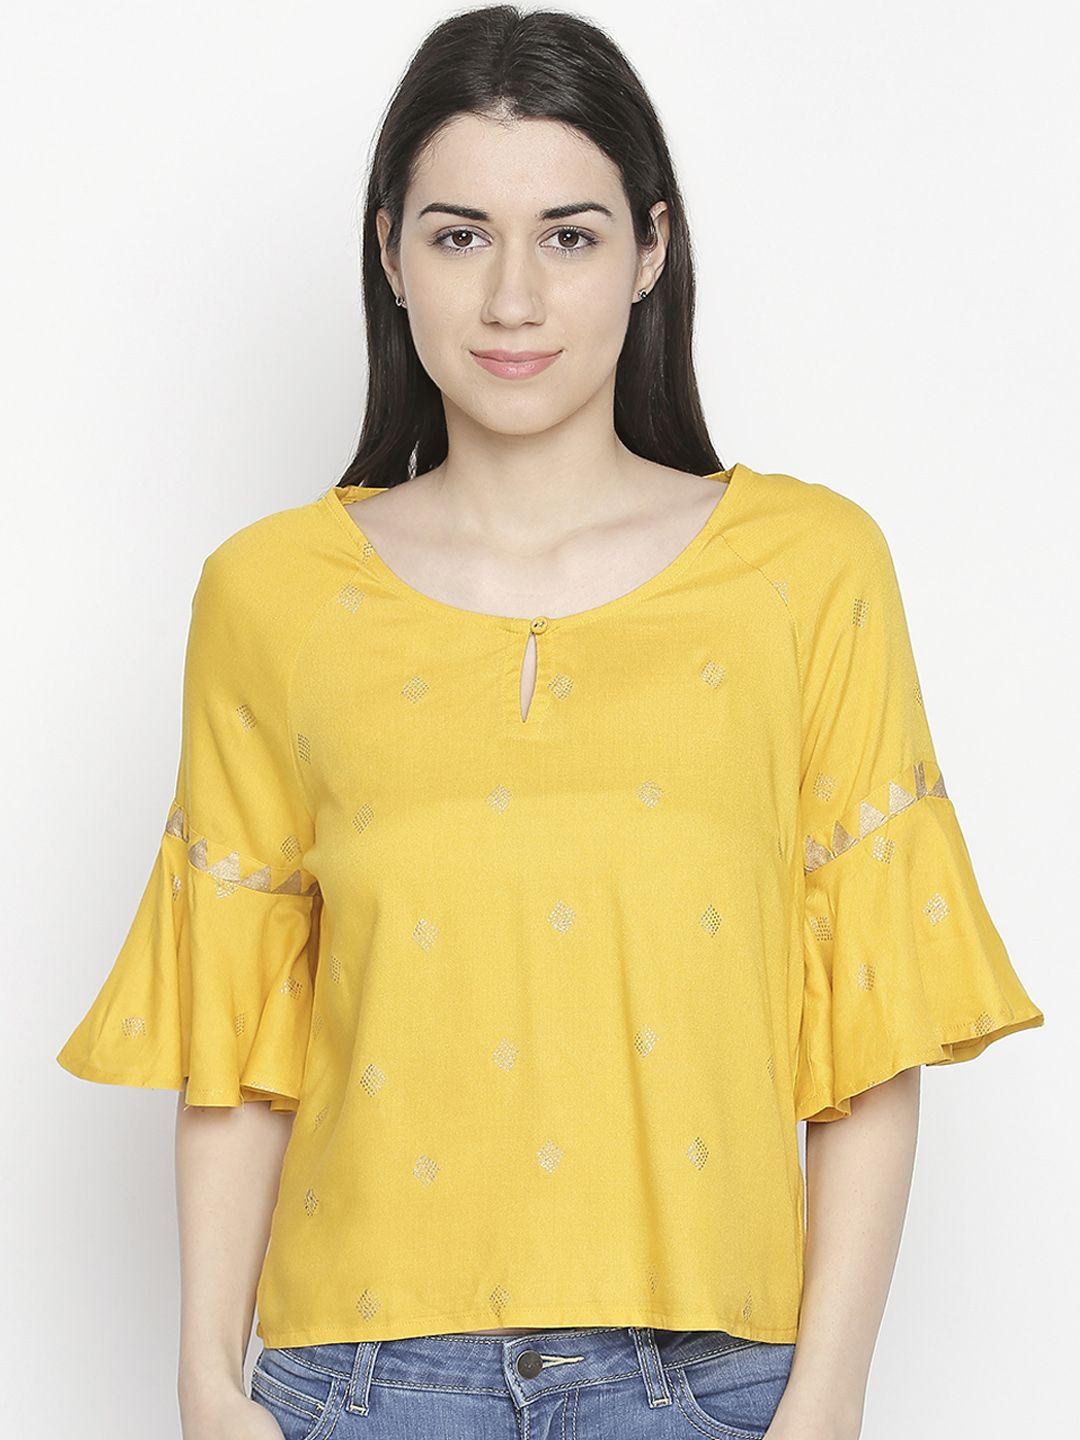 akkriti by pantaloons women yellow printed top